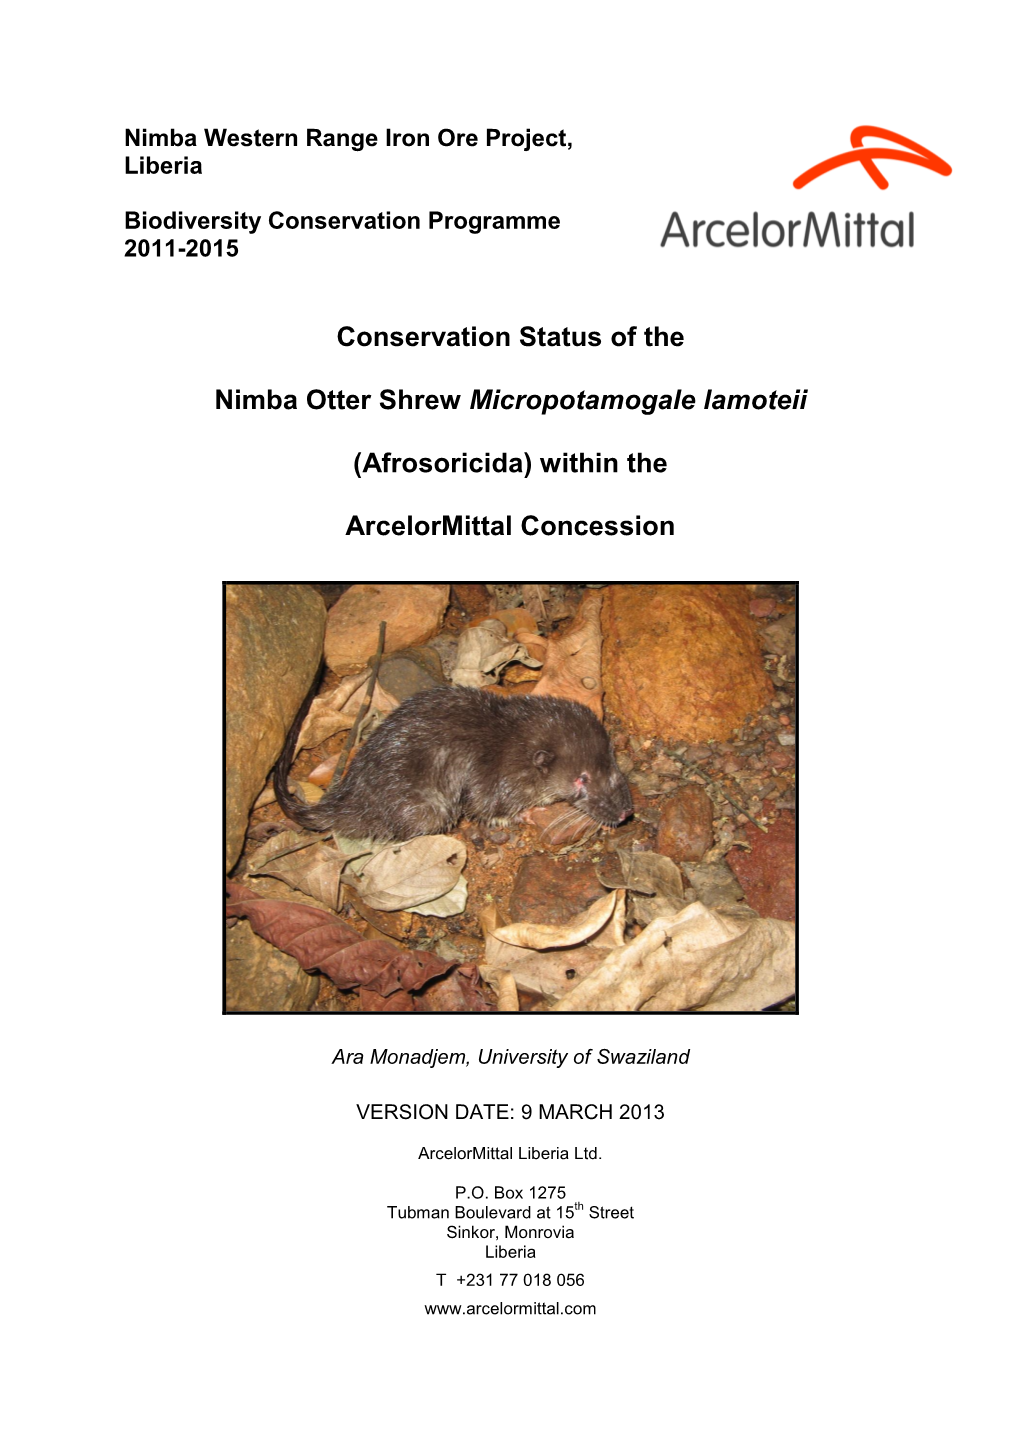 Conservation Status of the Nimba Otter Shrew Micropotamogale